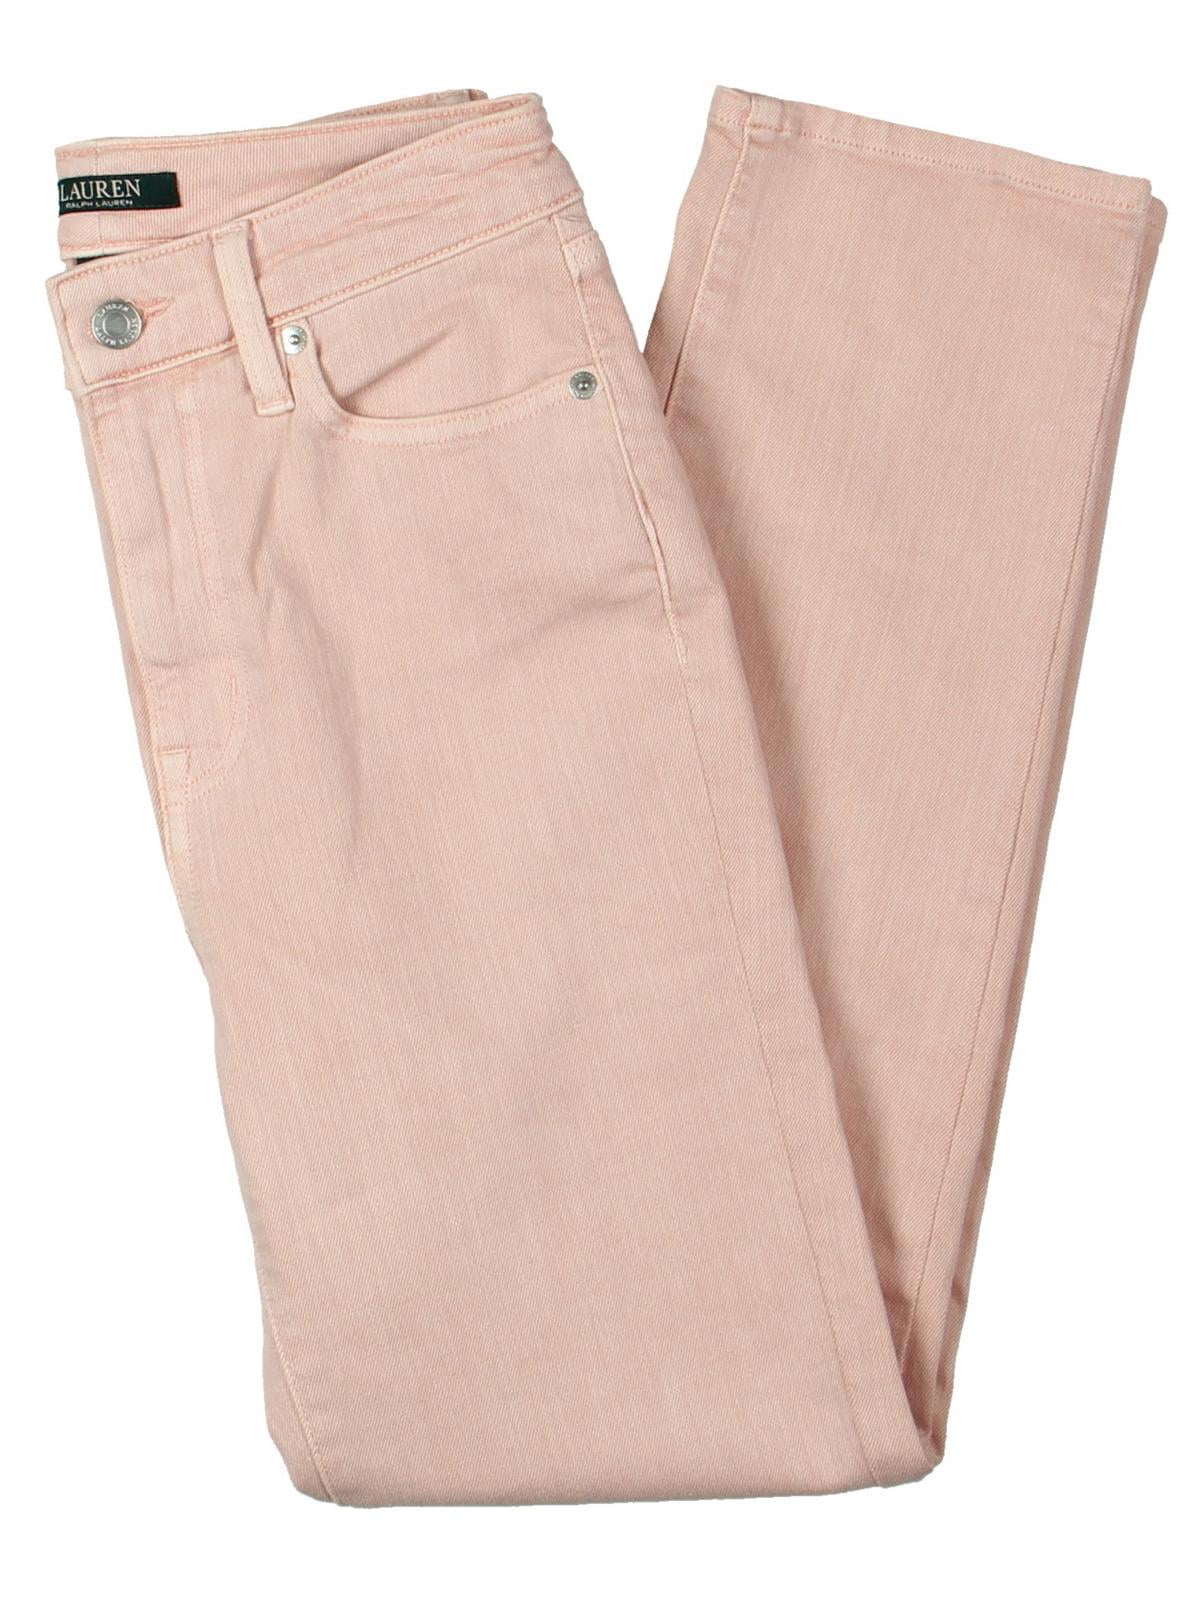 Photo 1 of Lauren Ralph Lauren Womens Denim High Rise Straight Leg Jeans Pink W 8/29